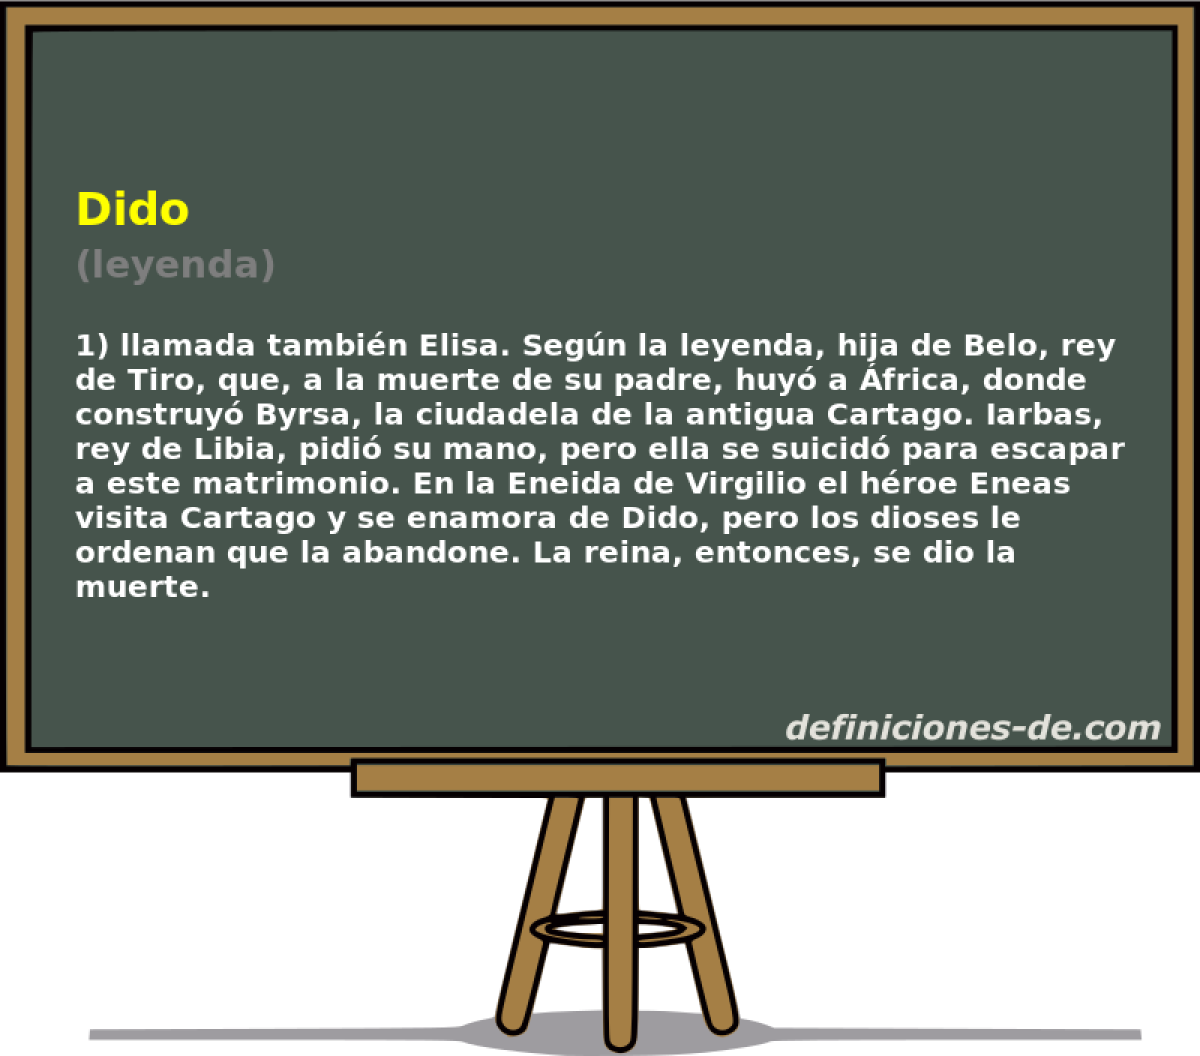 Dido (leyenda)